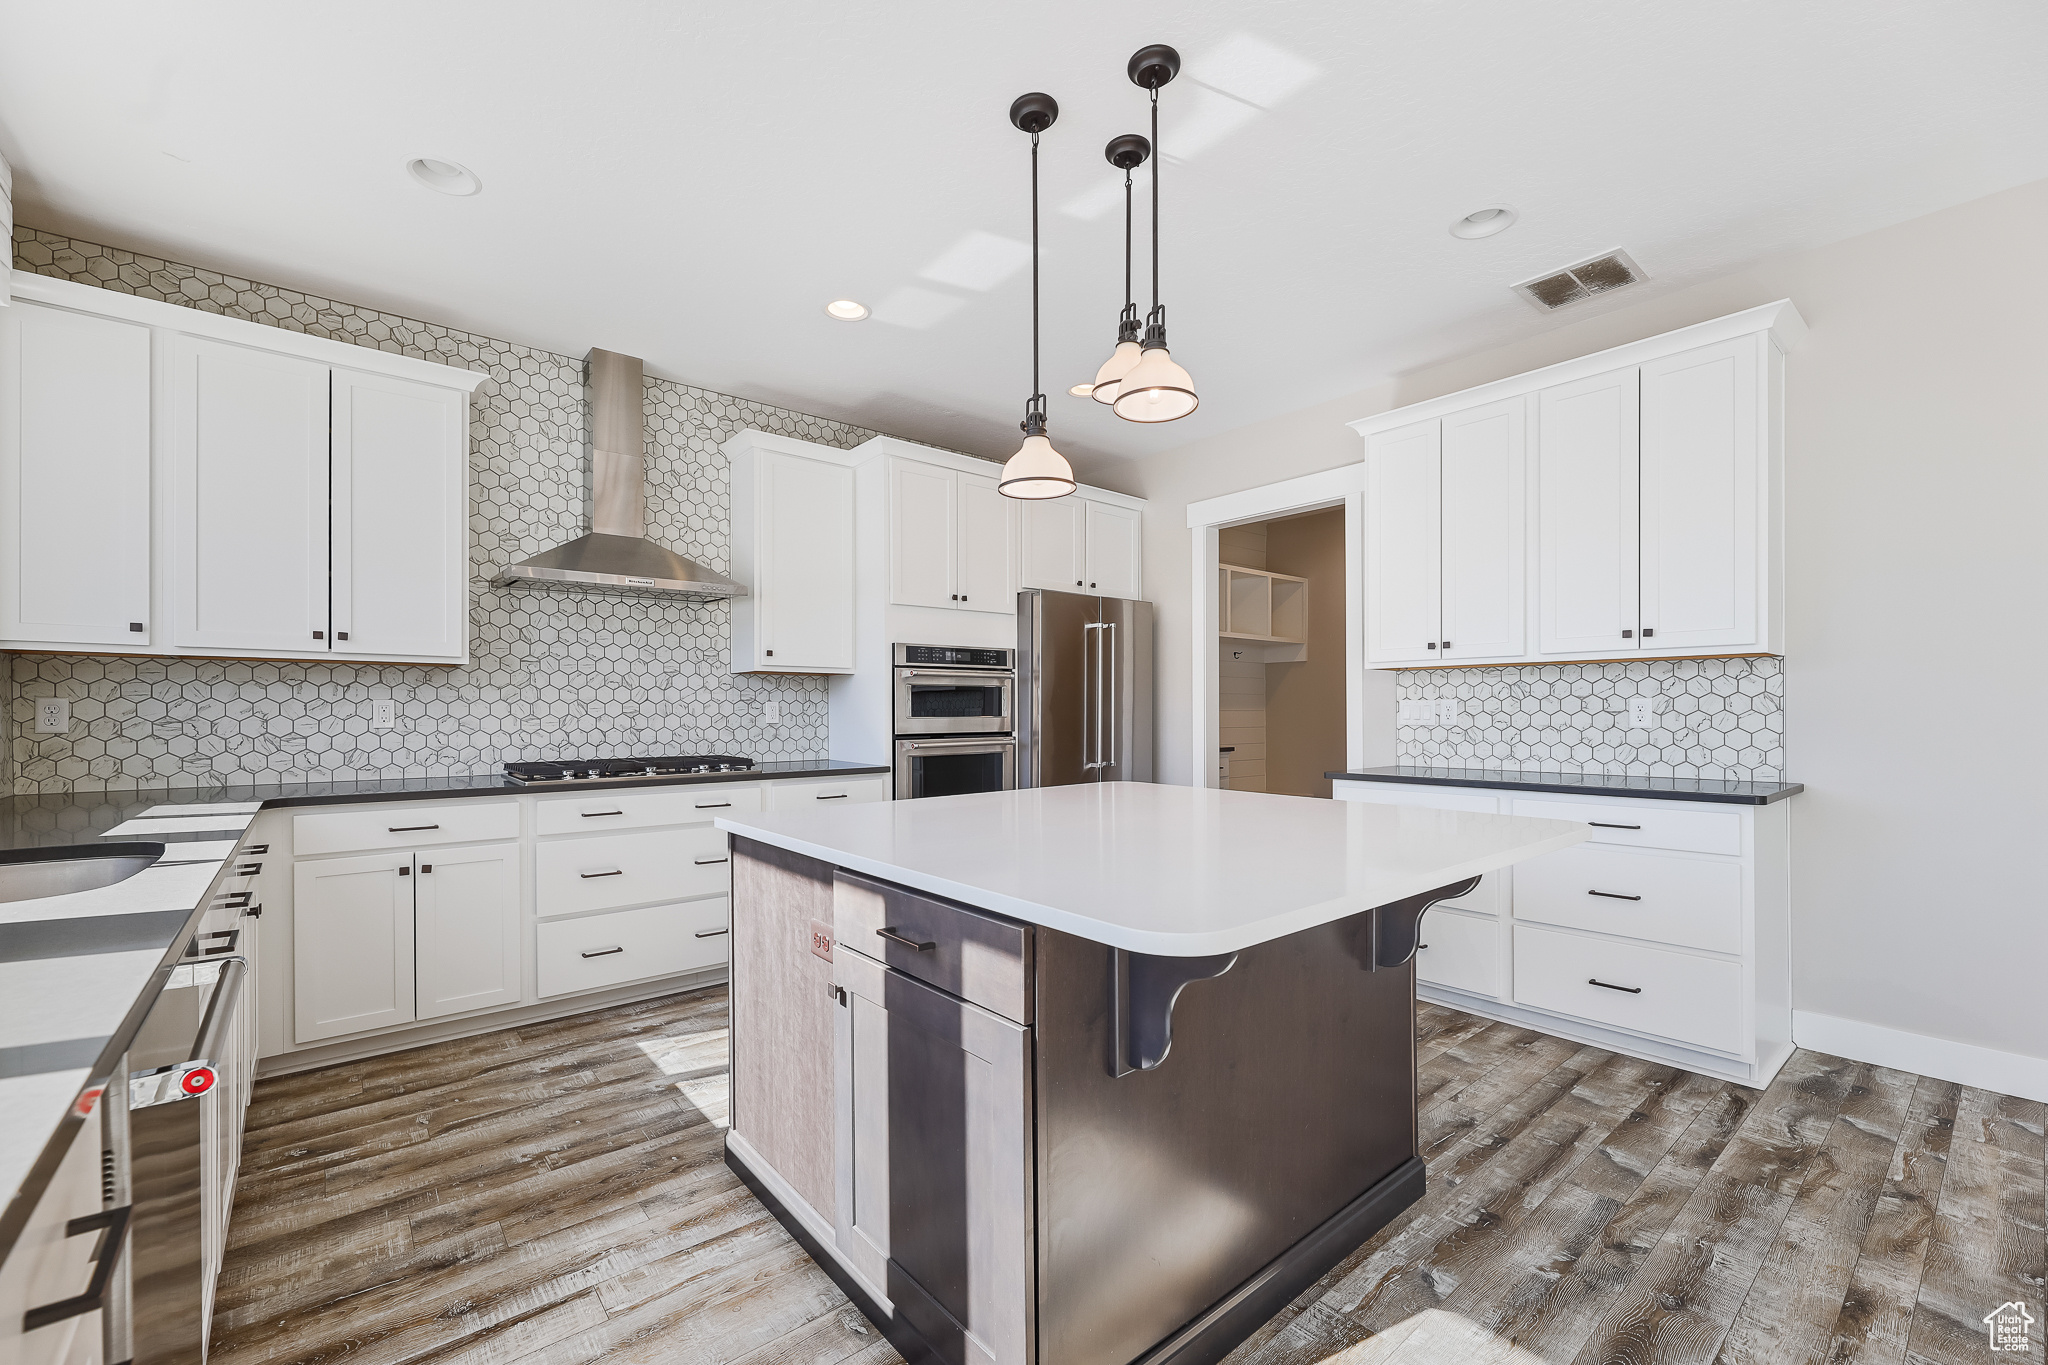 Kitchen featuring wall chimney range hood, pendant lighting, tasteful backsplash, a kitchen island, and stainless steel appliances